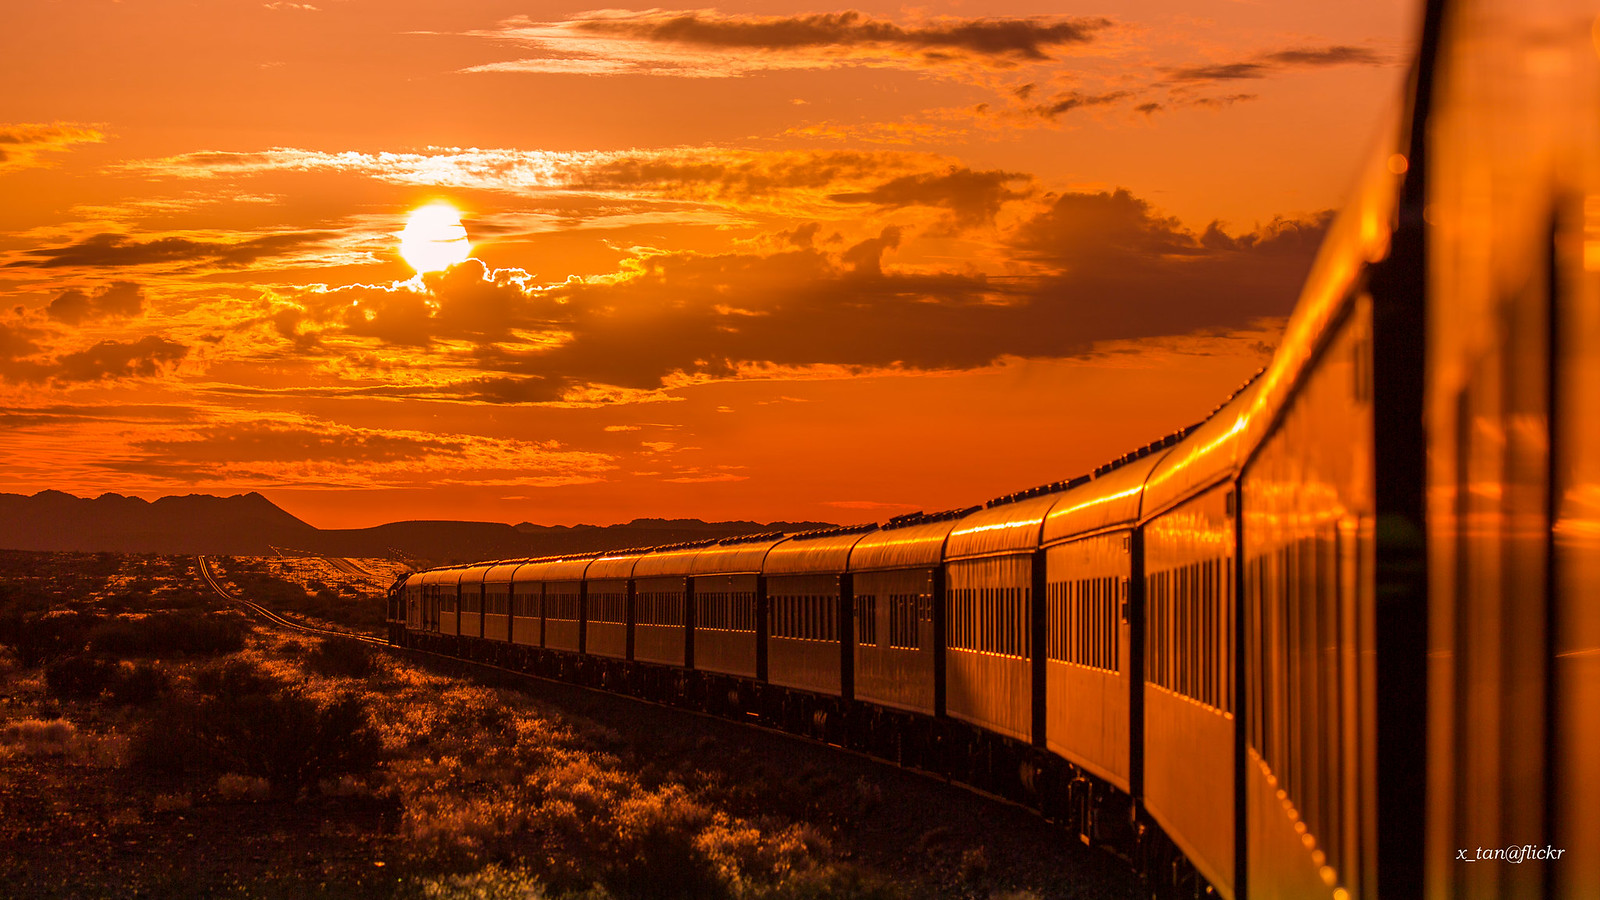 namibia railway safari